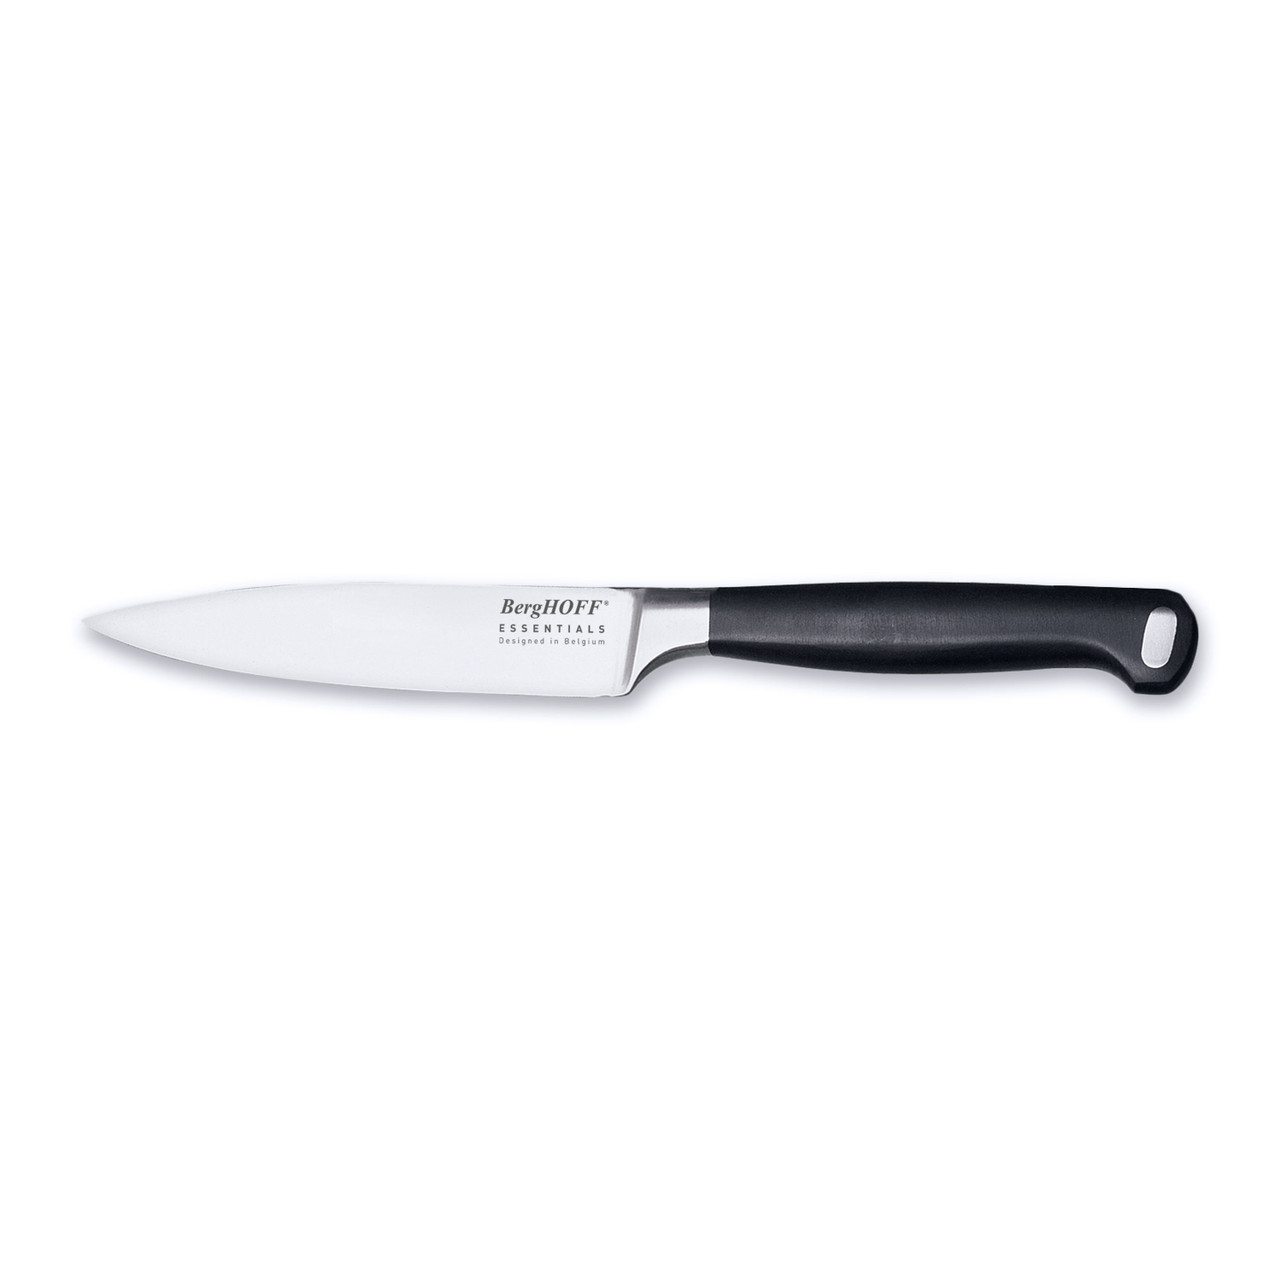 BergHOFF Essentials 3.5 Stainless Steel Paring Knife, Gourmet